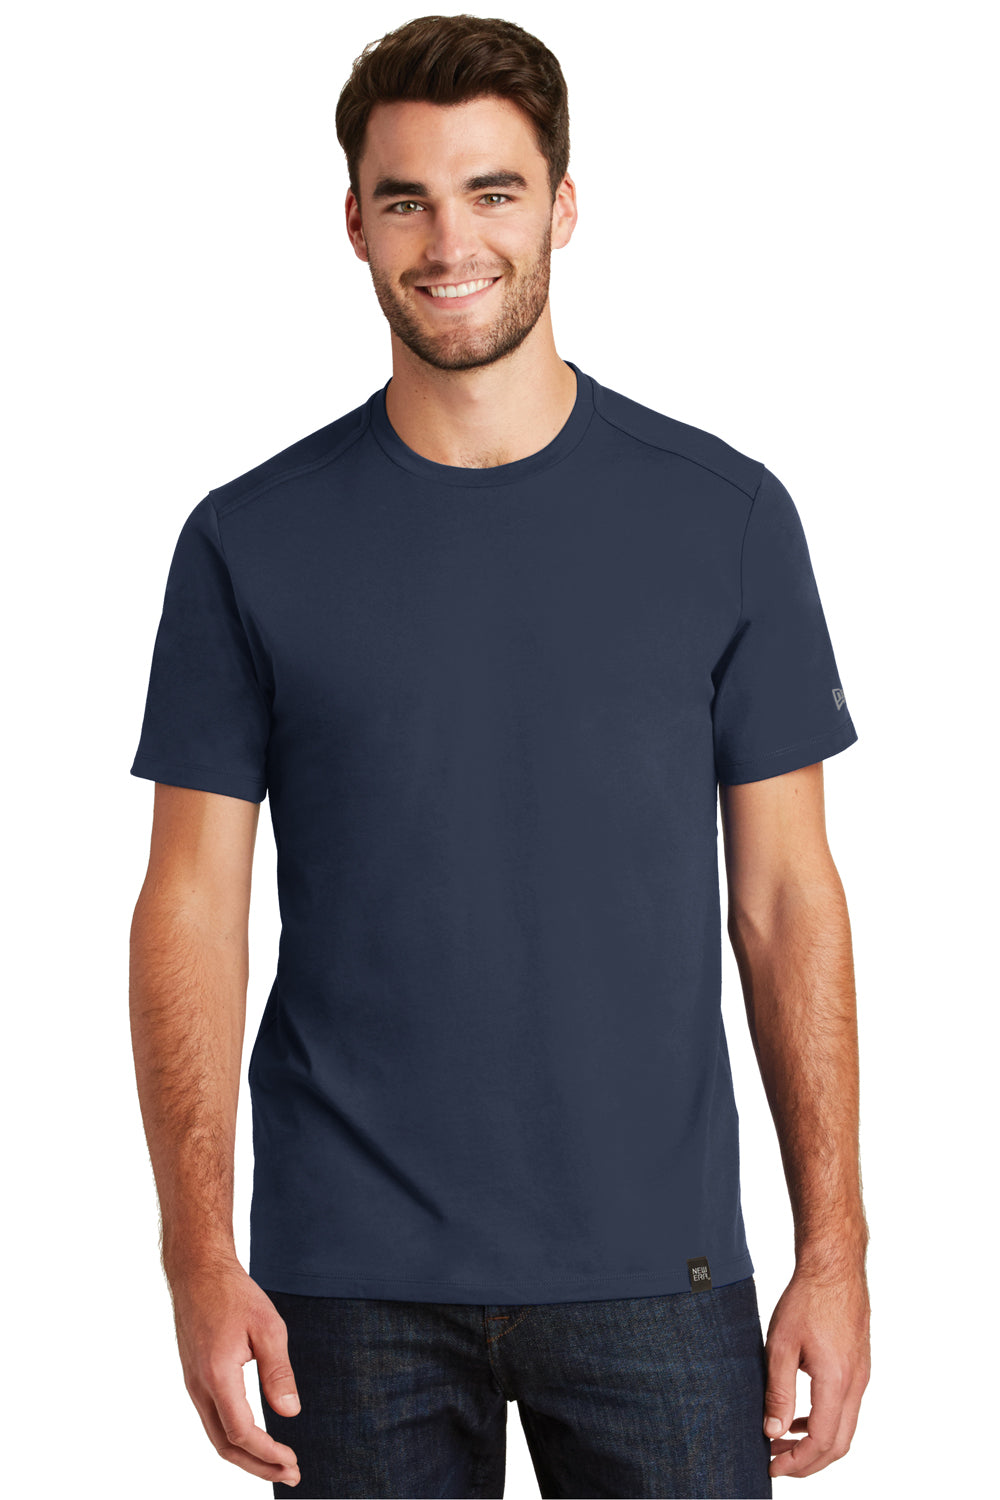 New Era NEA100 Mens Heritage Short Sleeve Crewneck T-Shirt Navy Blue Front